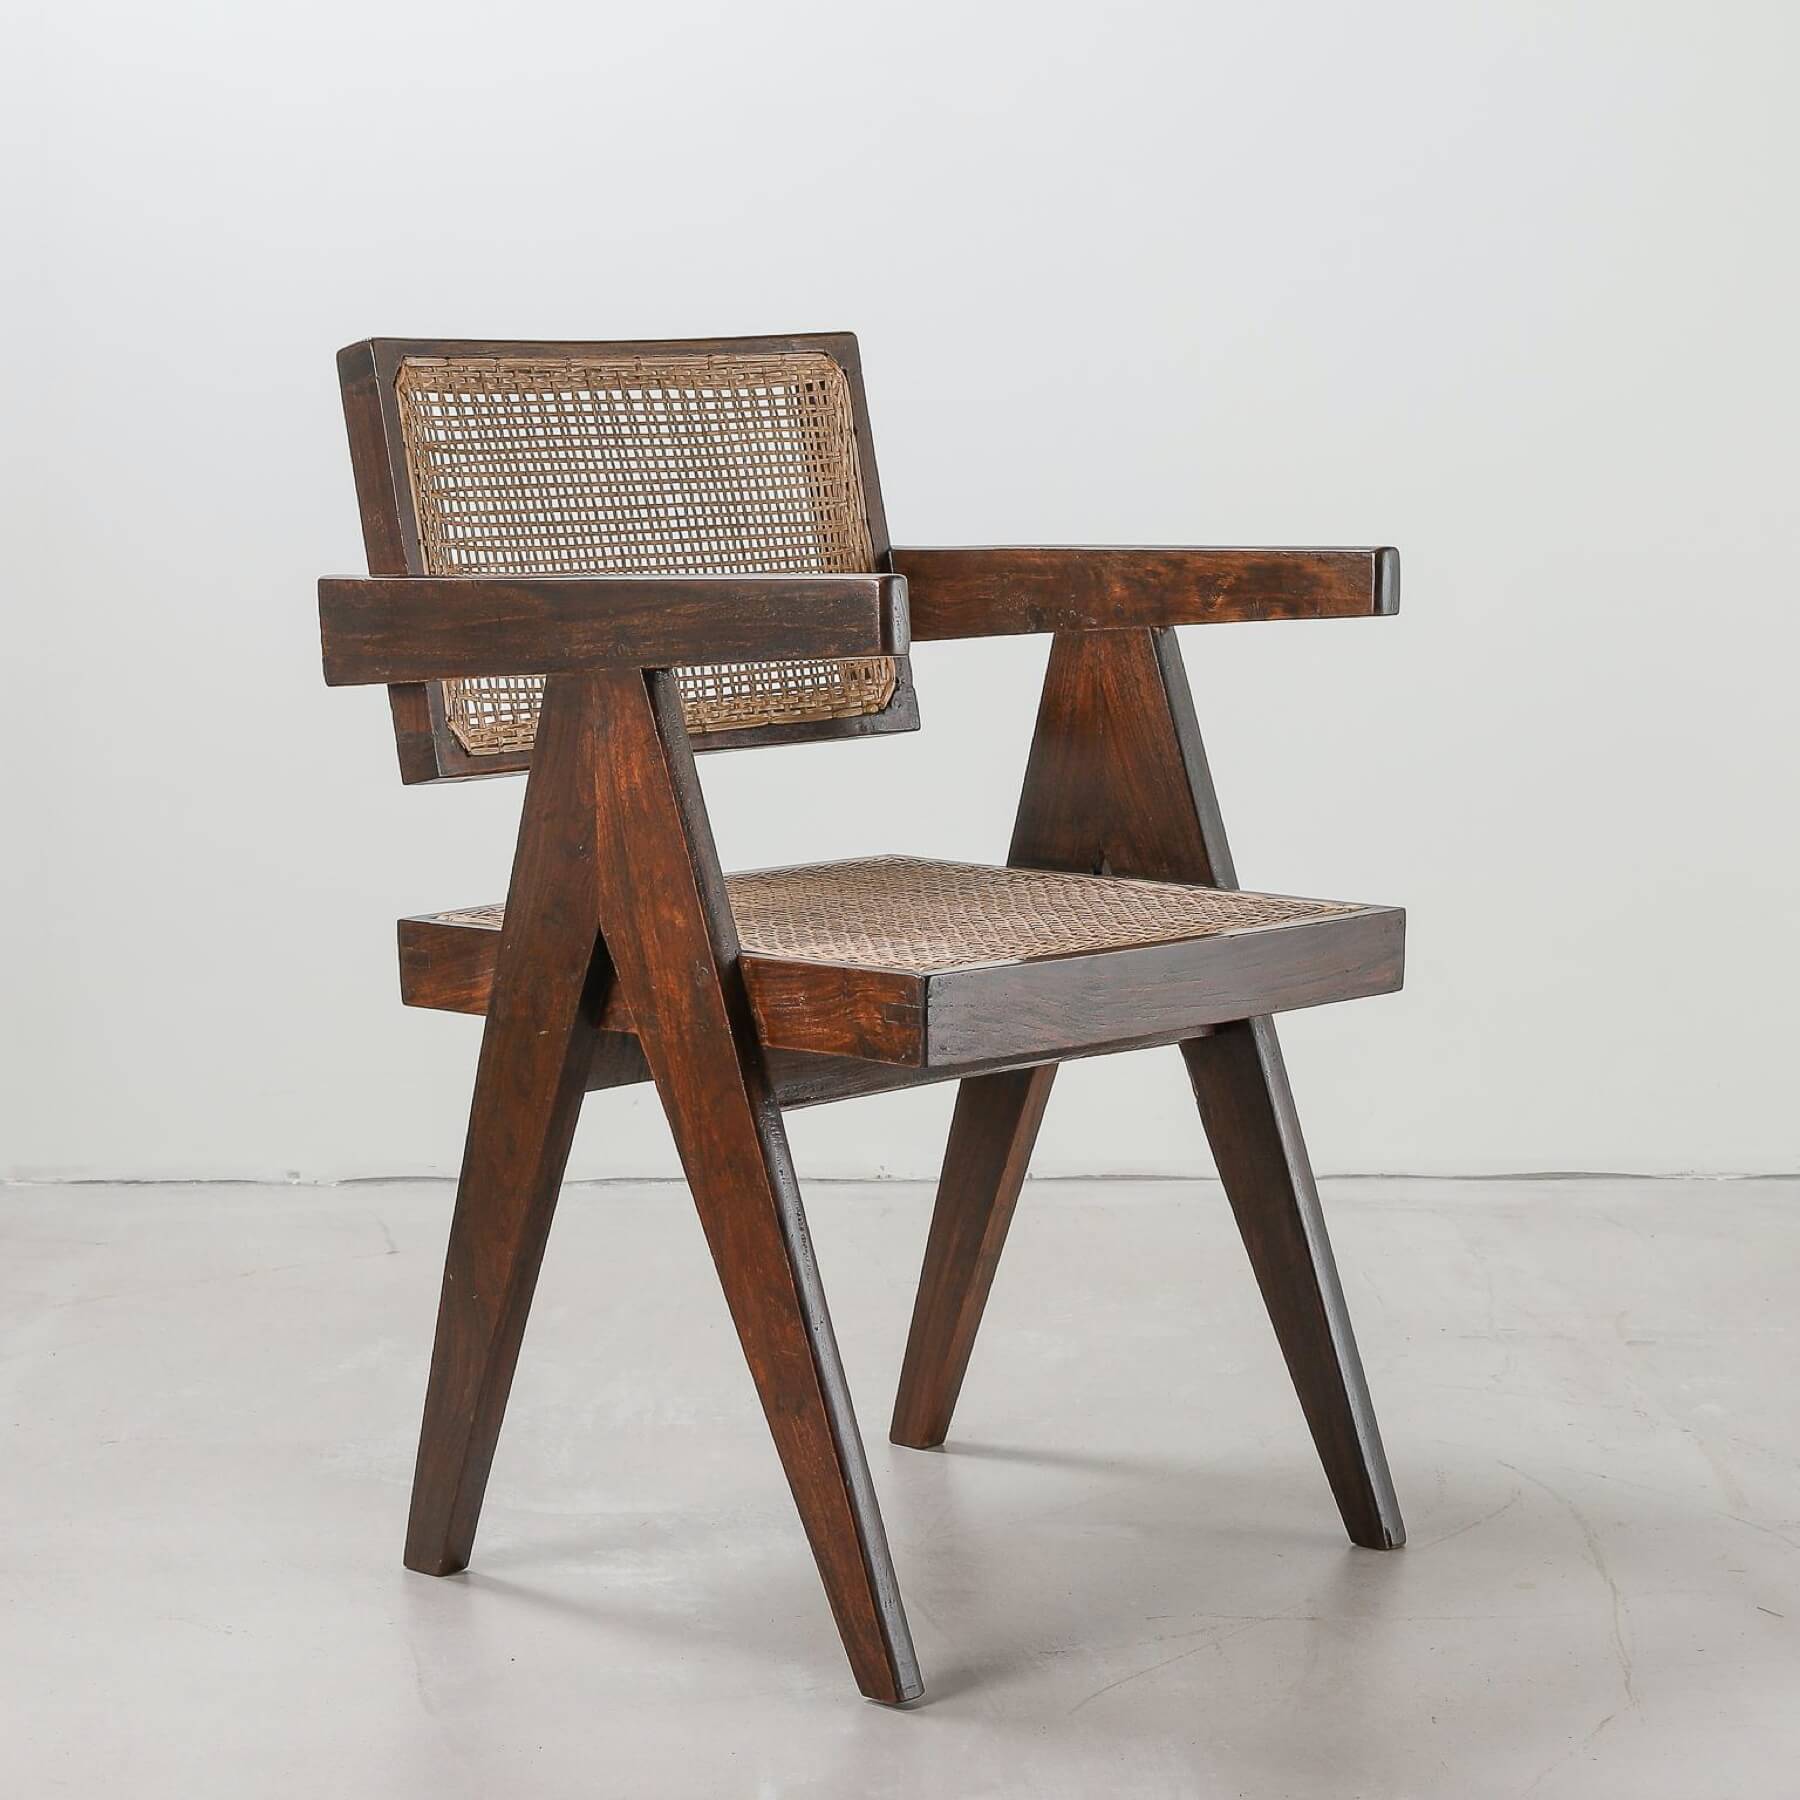 Original Pierre Jeanneret office chair